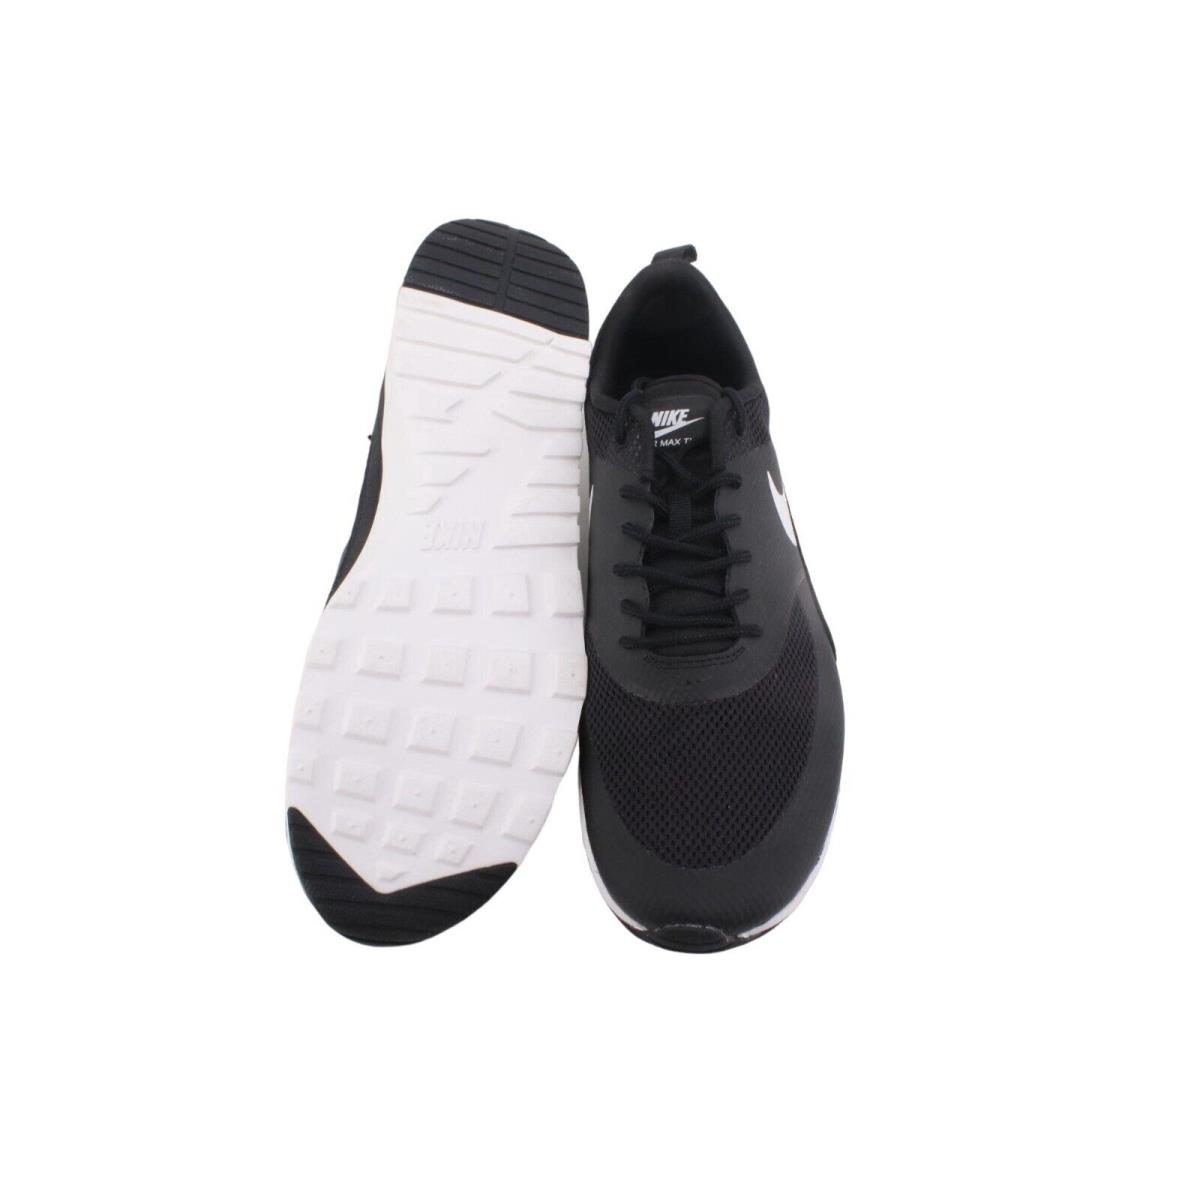 Nike Women`s Air Max Thea Running Shoe Size 11.5 Black/white - Black/Summit White